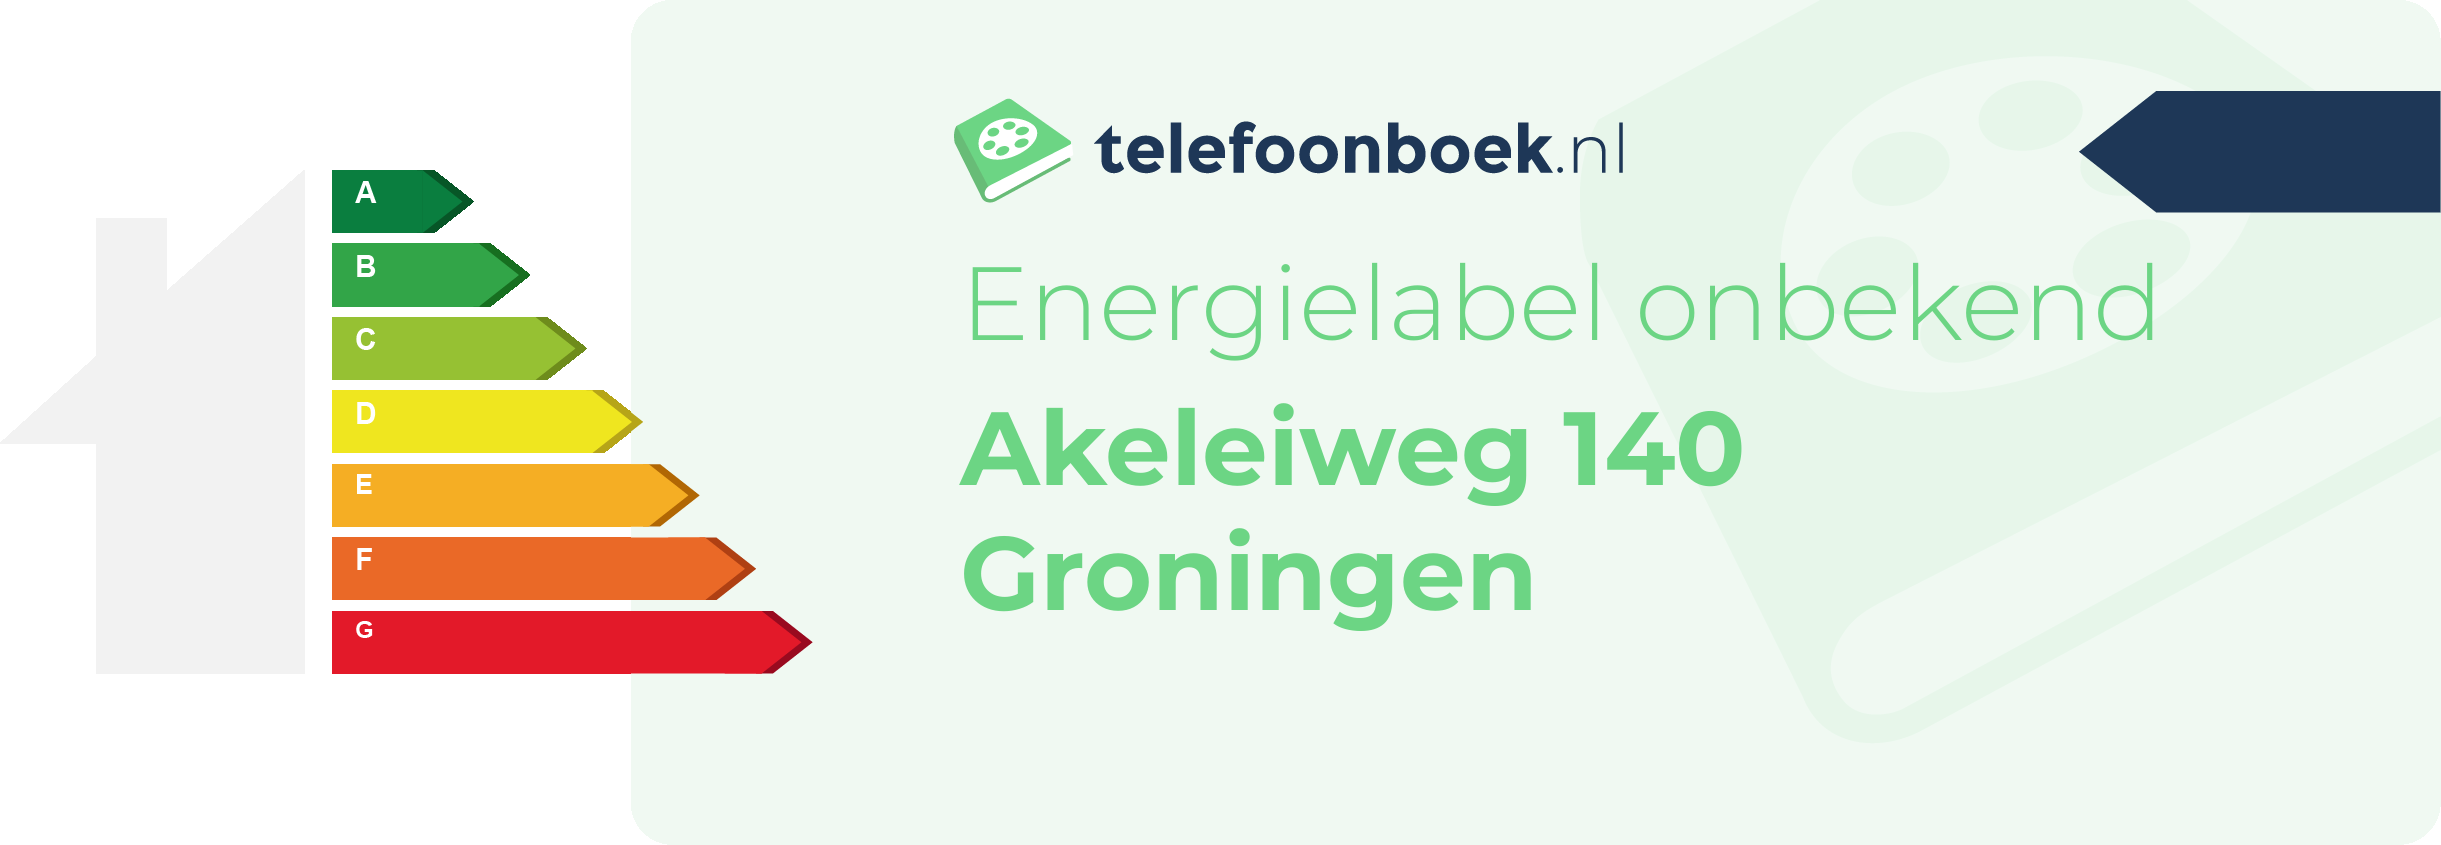 Energielabel Akeleiweg 140 Groningen